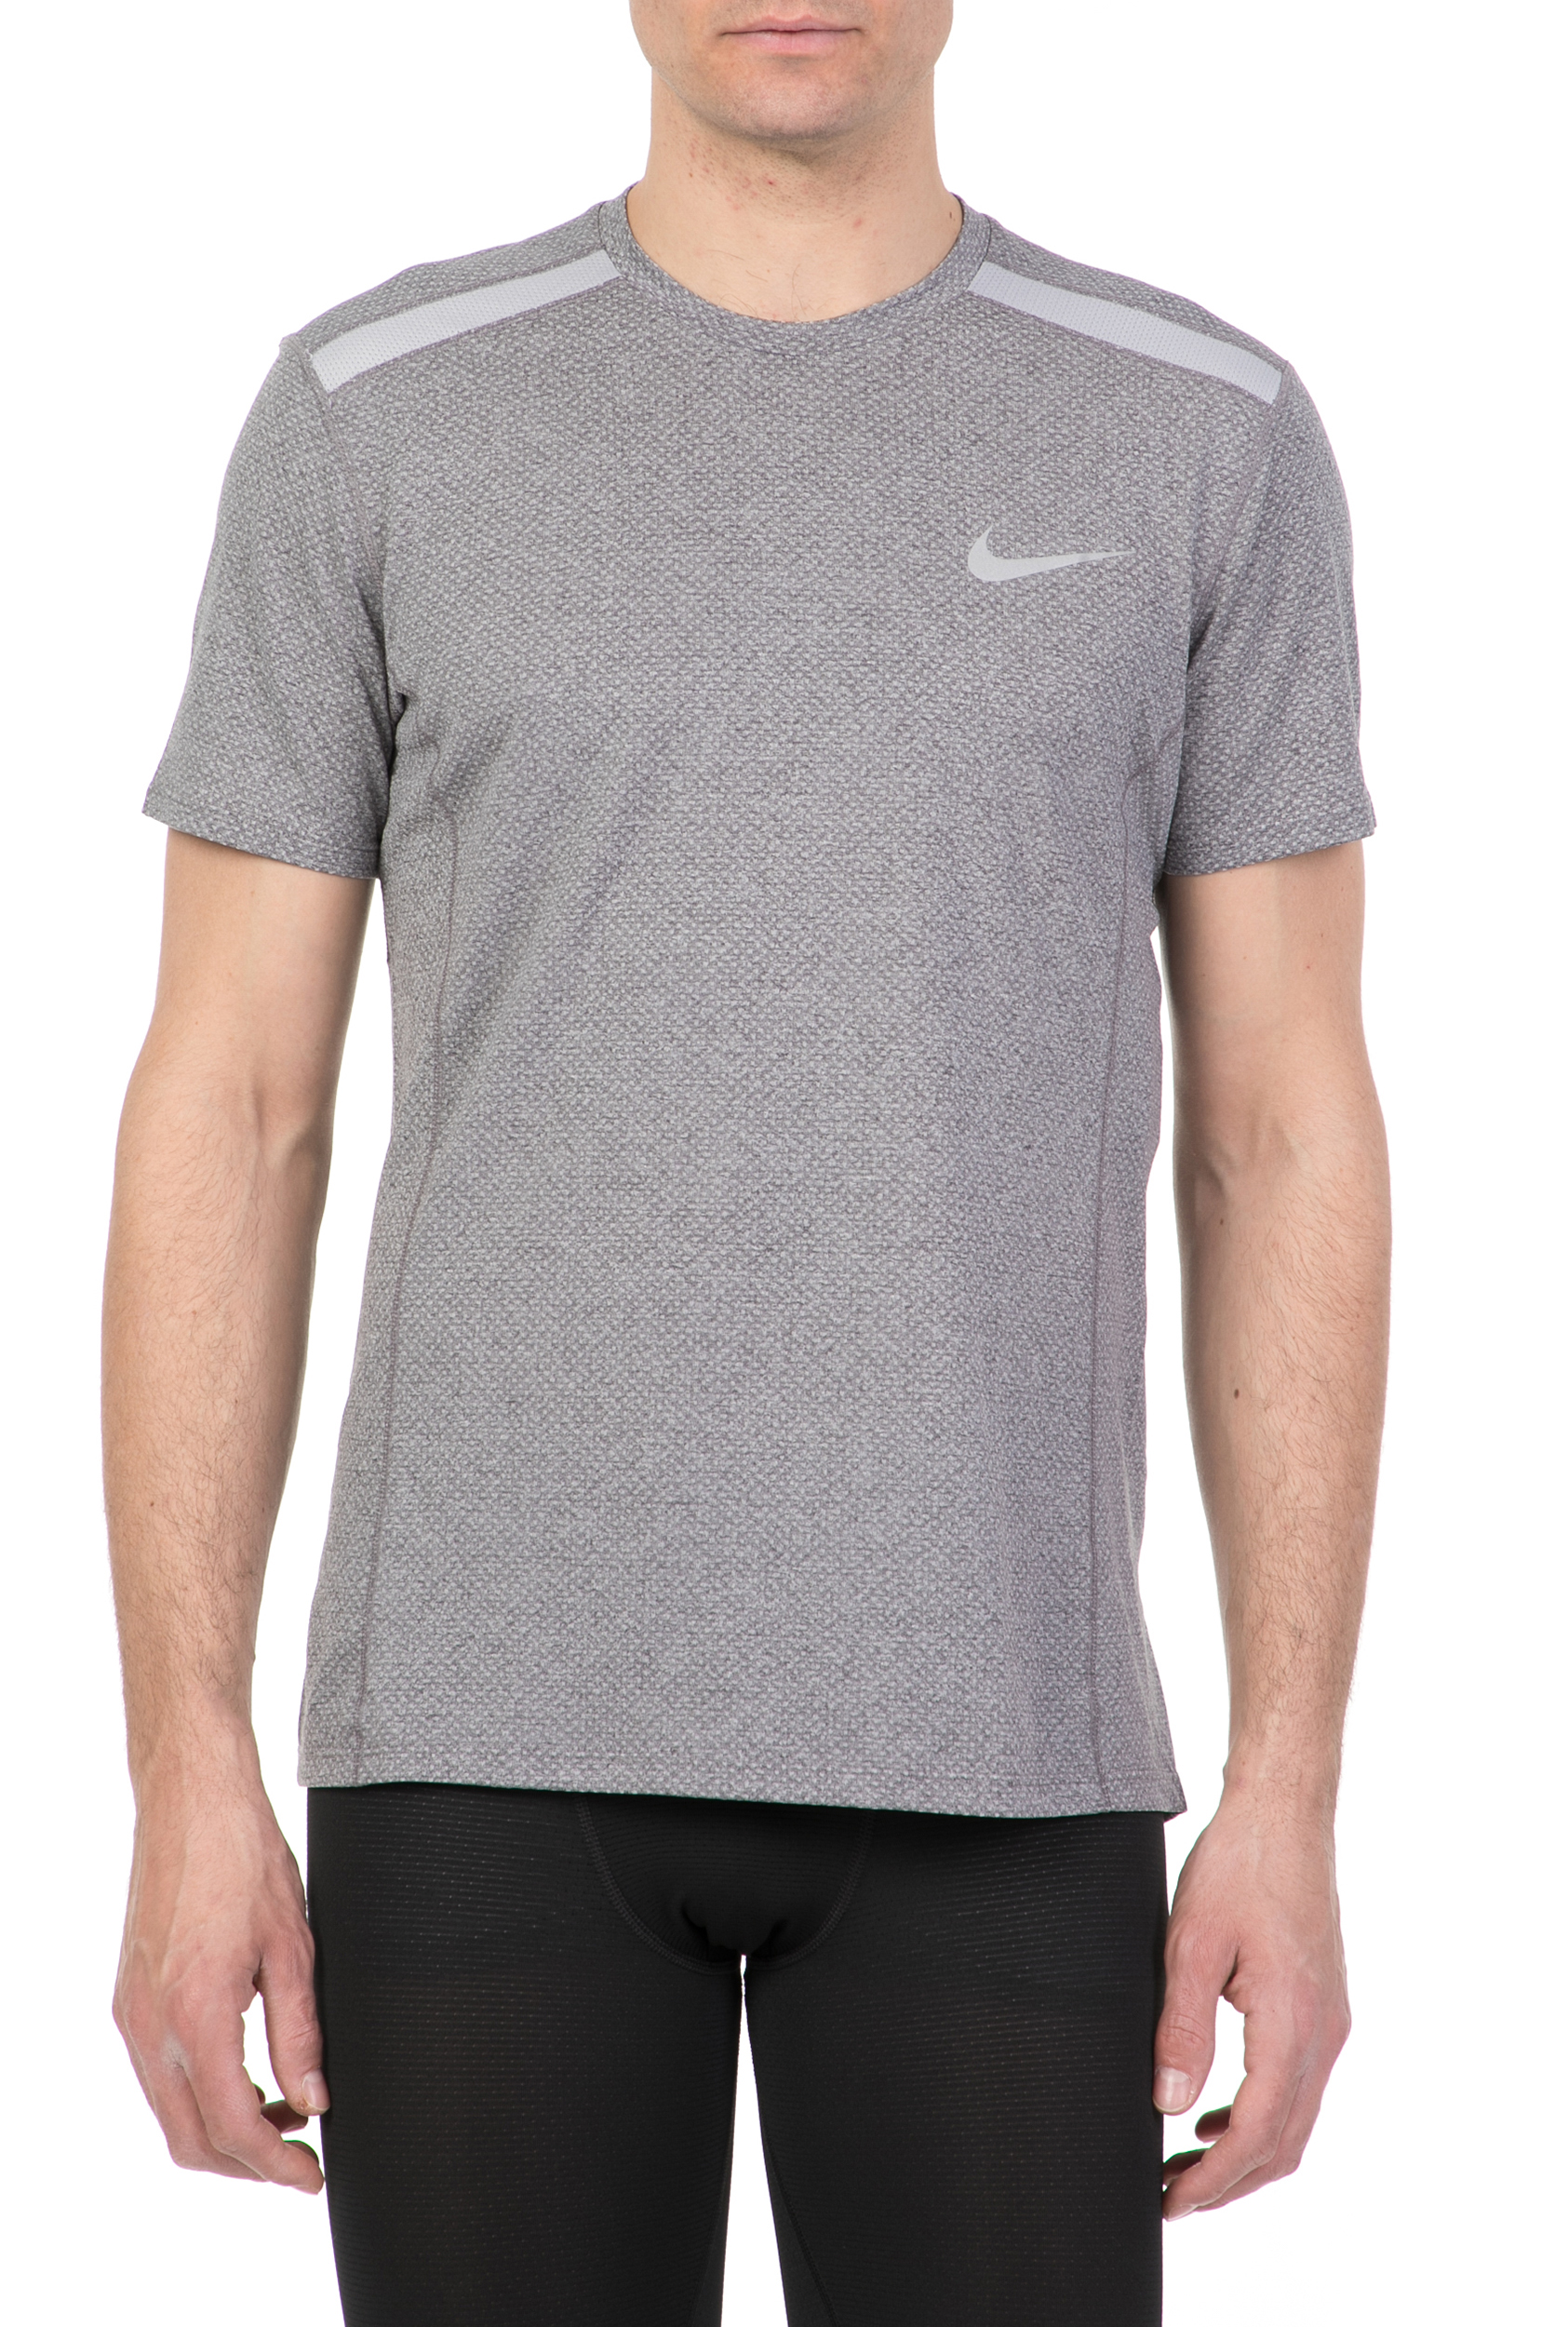 NIKE - Ανδρική κοντομάνικη μπλούζα NIKE COOL MILER TOP SS γκρι Ανδρικά/Ρούχα/Αθλητικά/T-shirt